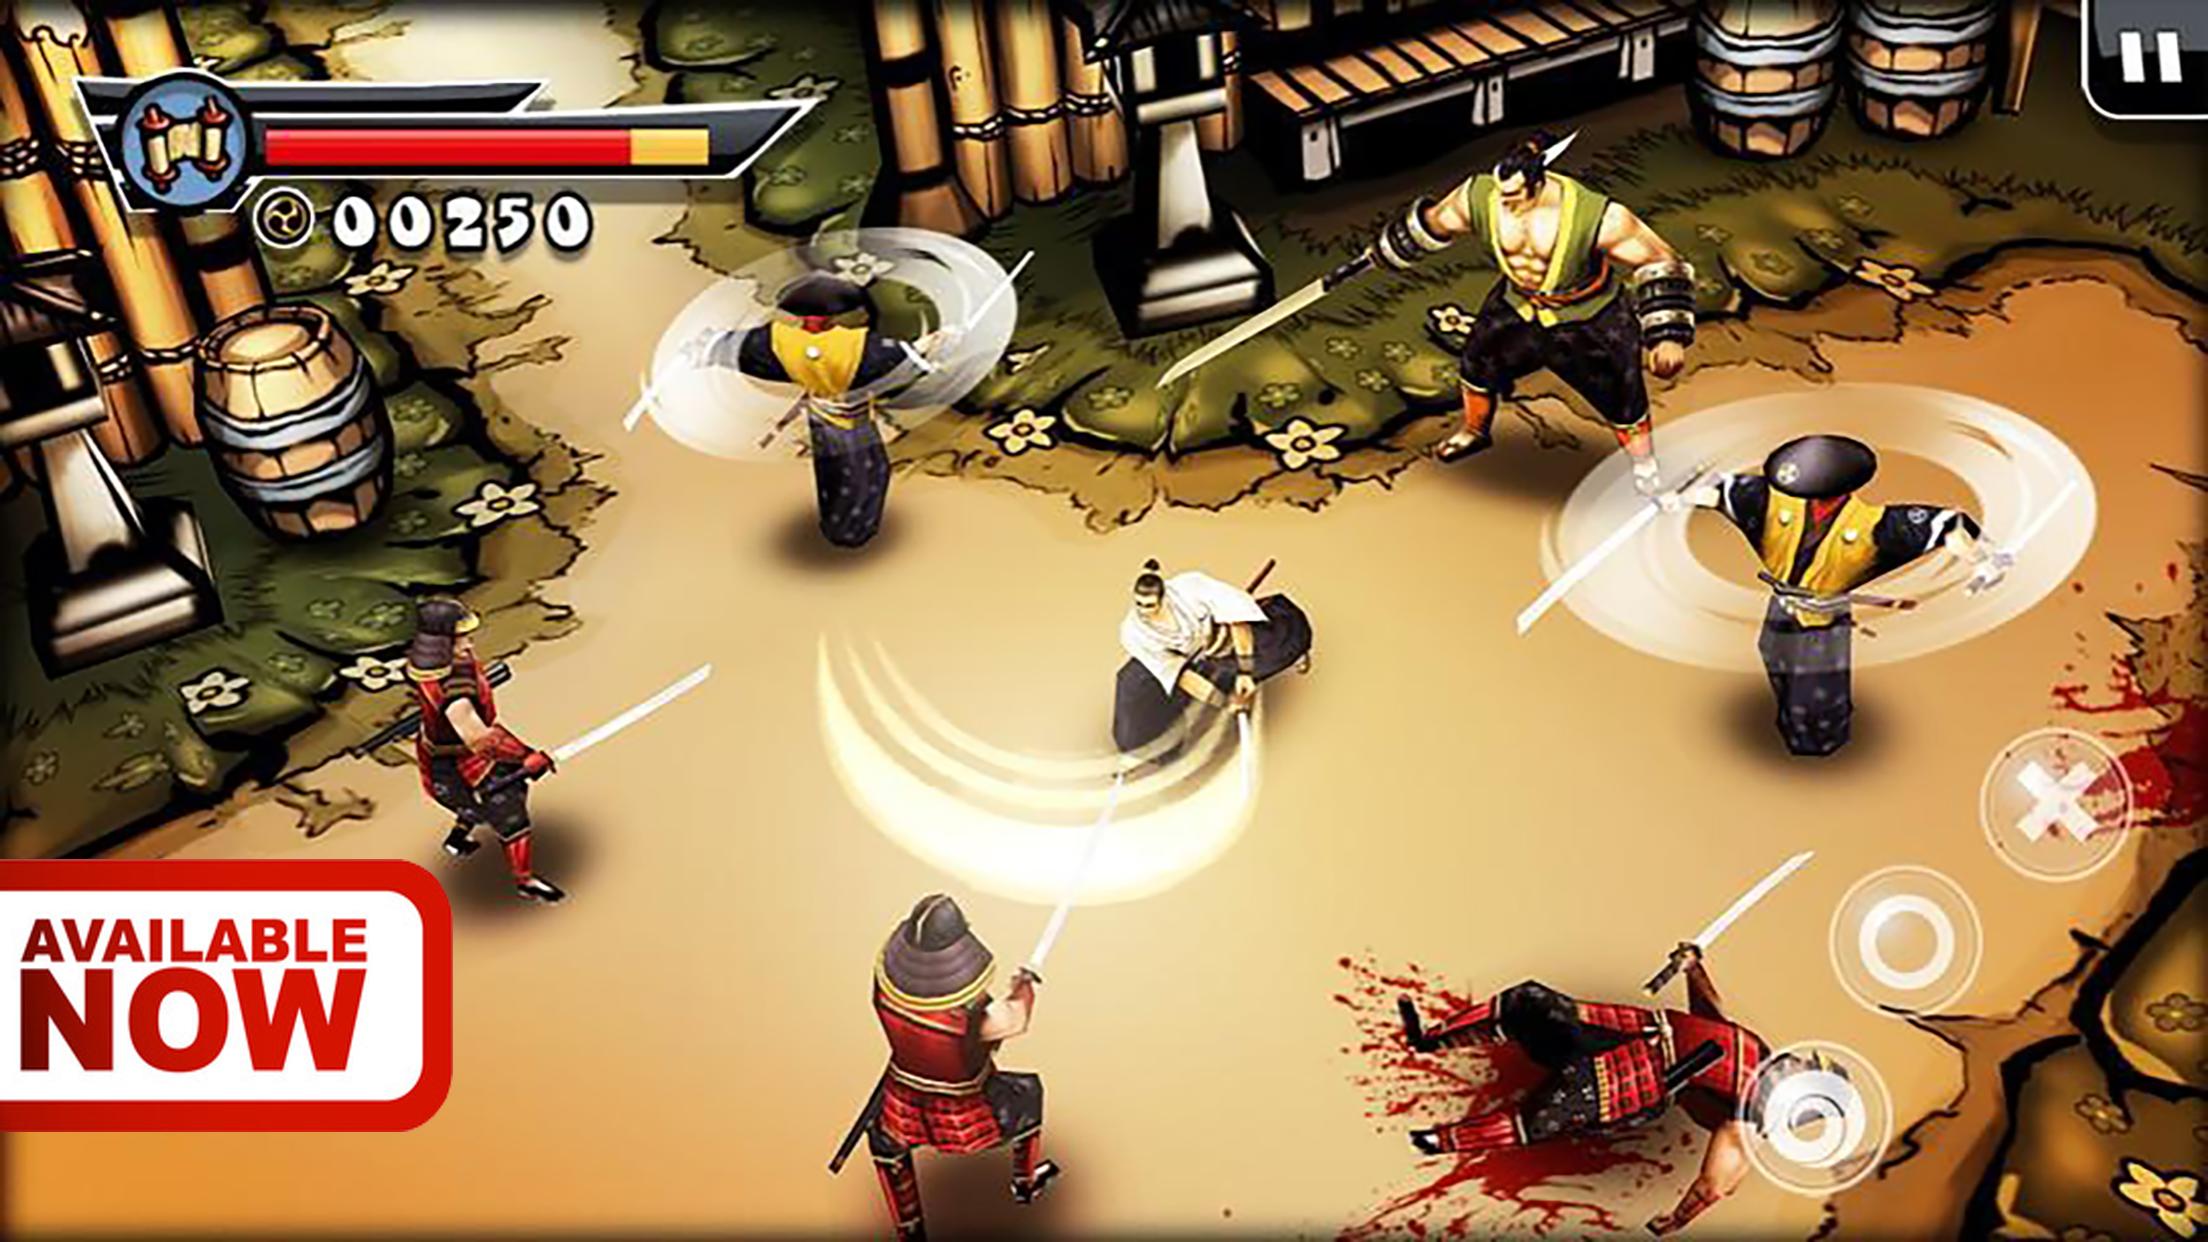 Игра ниндзя все открыто. Samurai 2 Vengeance. Samurai II Vengeance андроид. Инди игра про самурая. Игры про самураев на ПК.